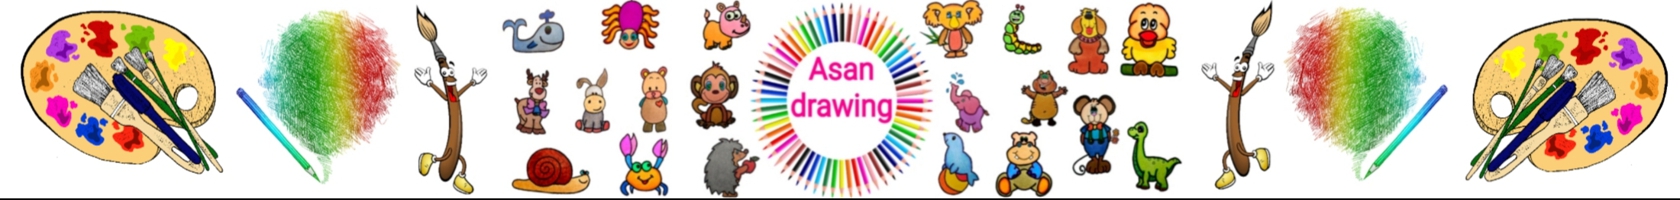  Asan drawing